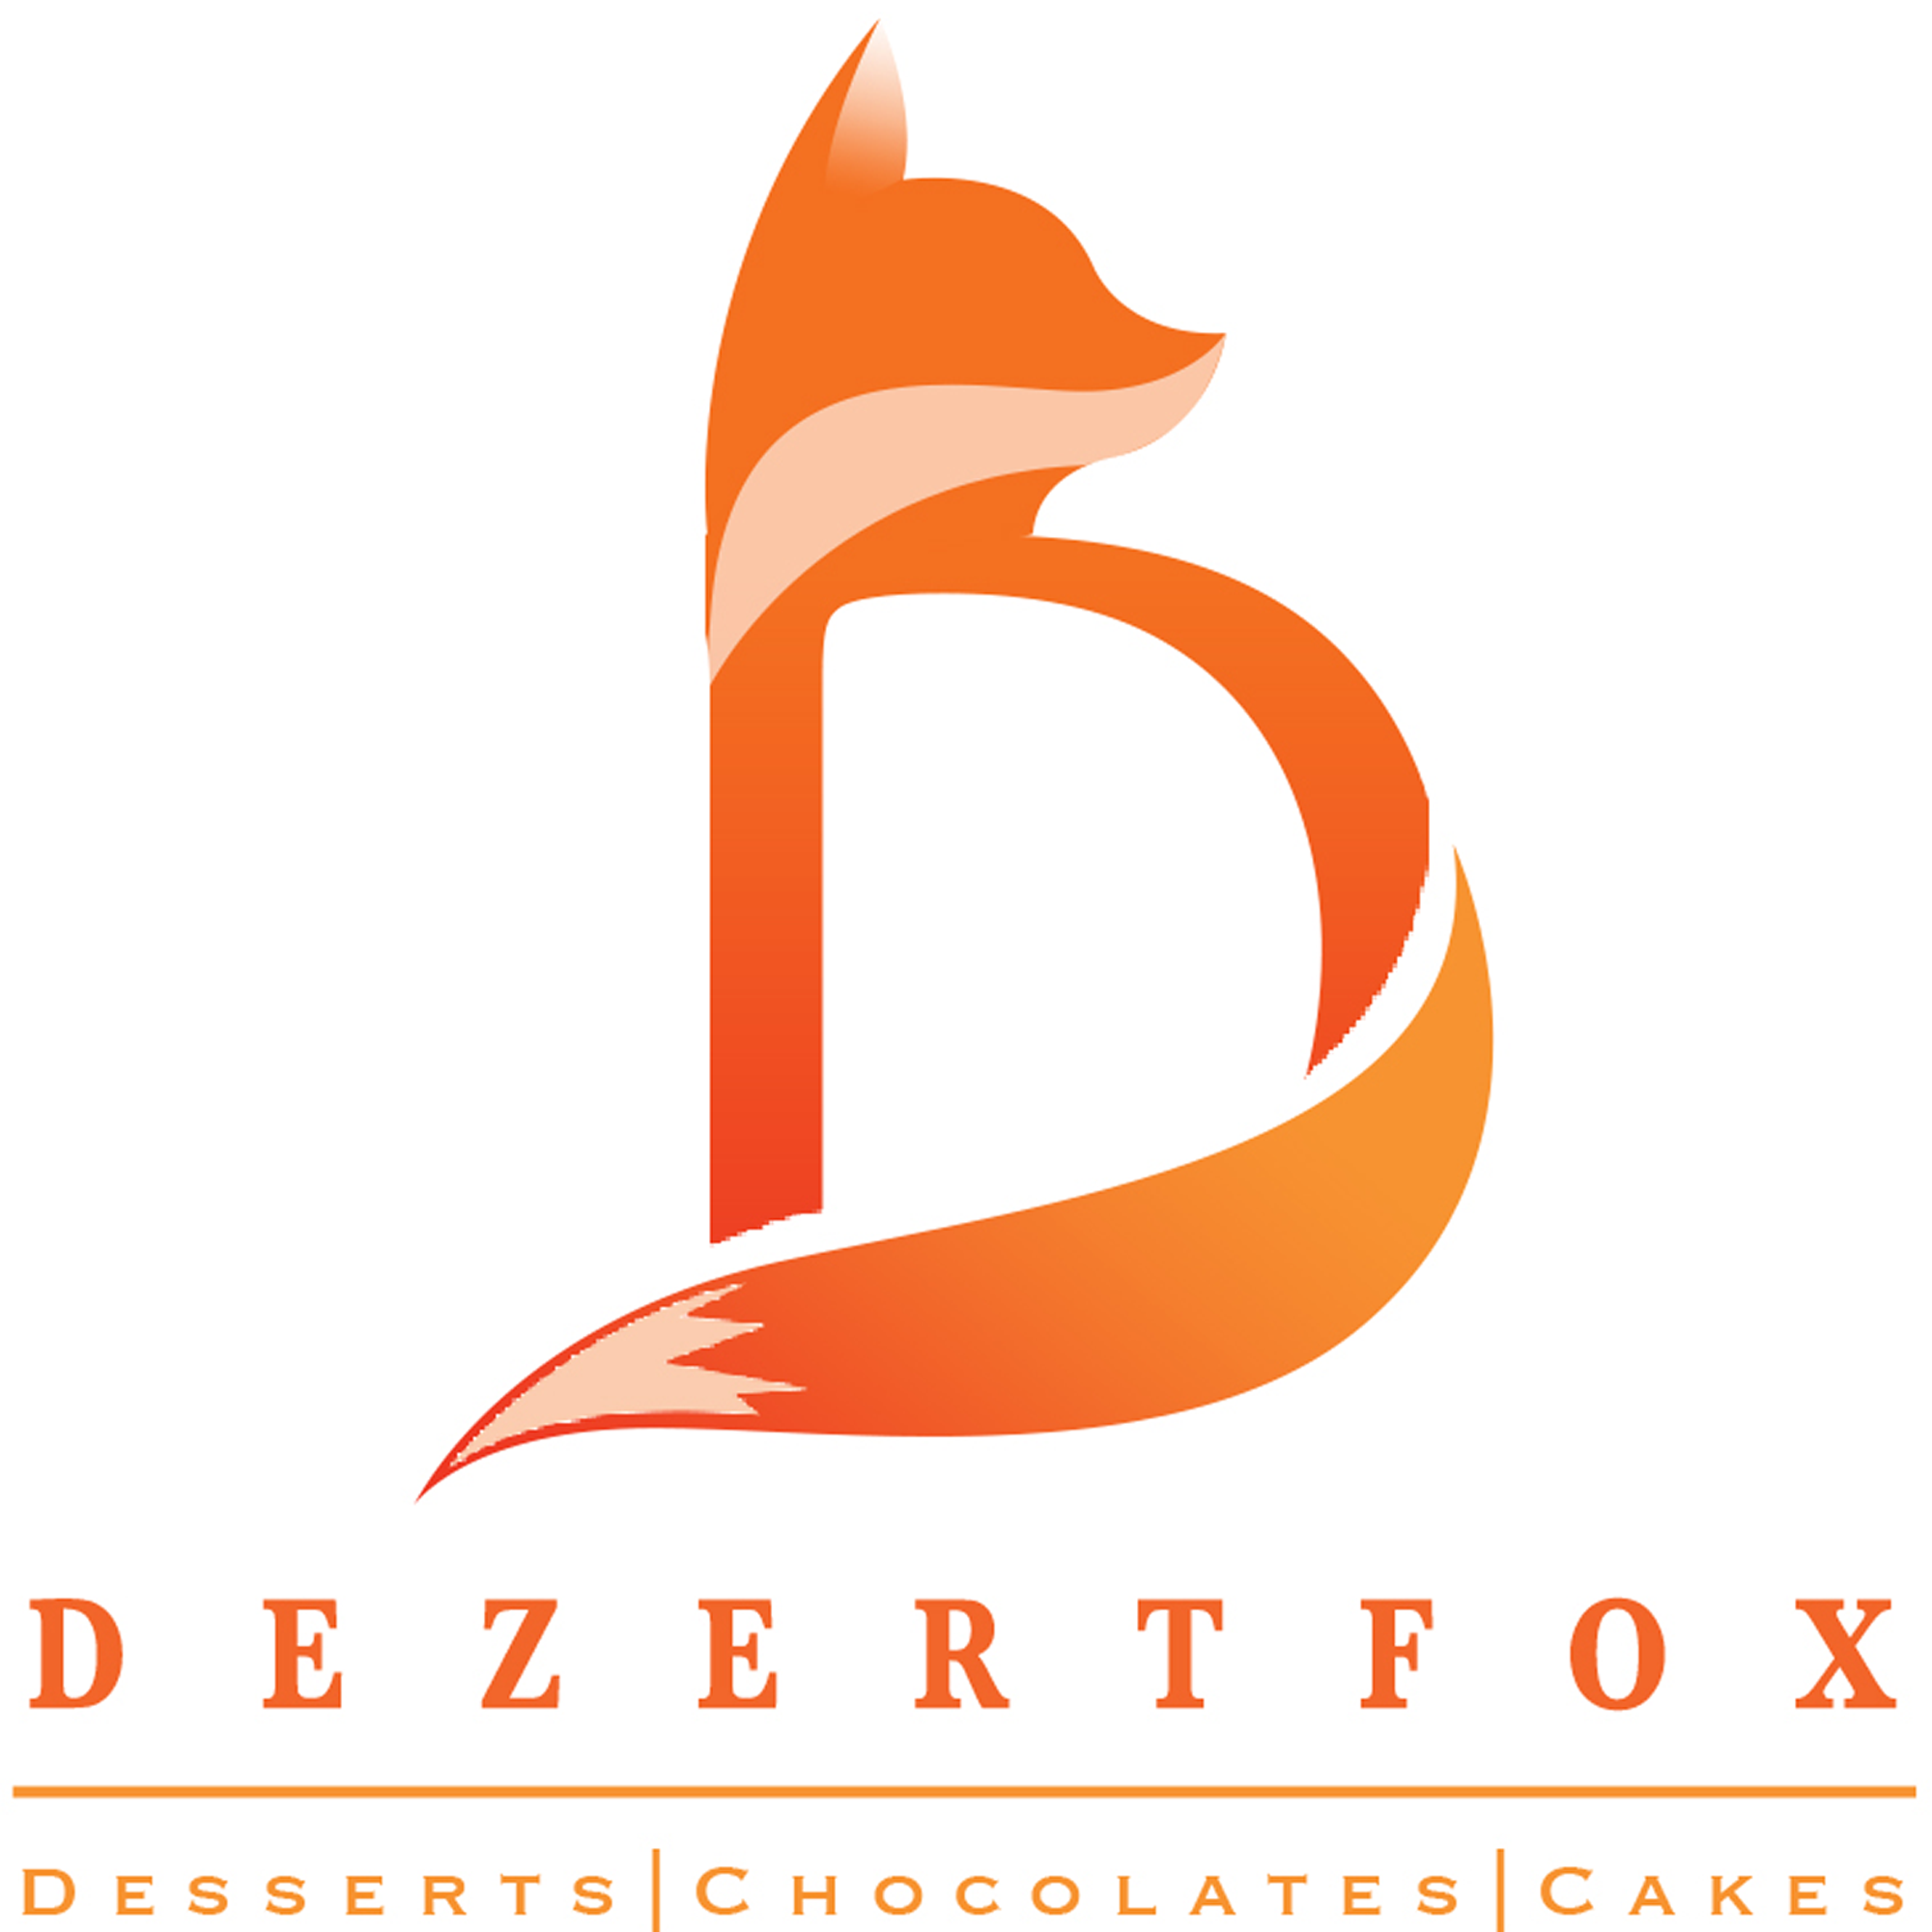 Dezertfox logo